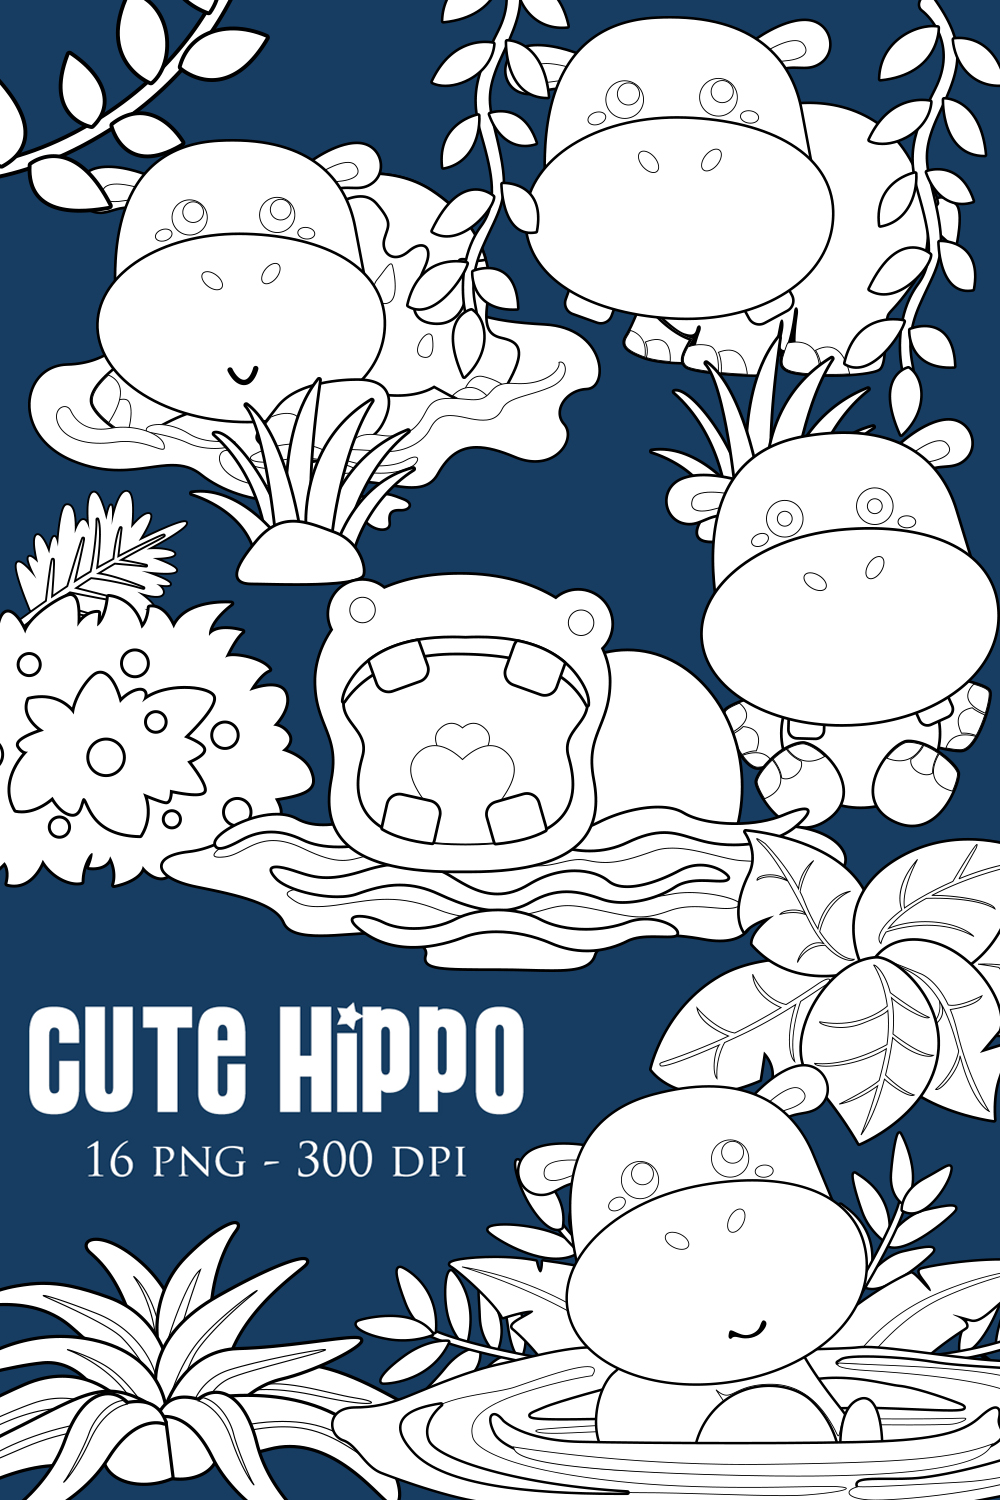 Cute Hippopotamus Animal Digital Stamp Outline pinterest preview image.